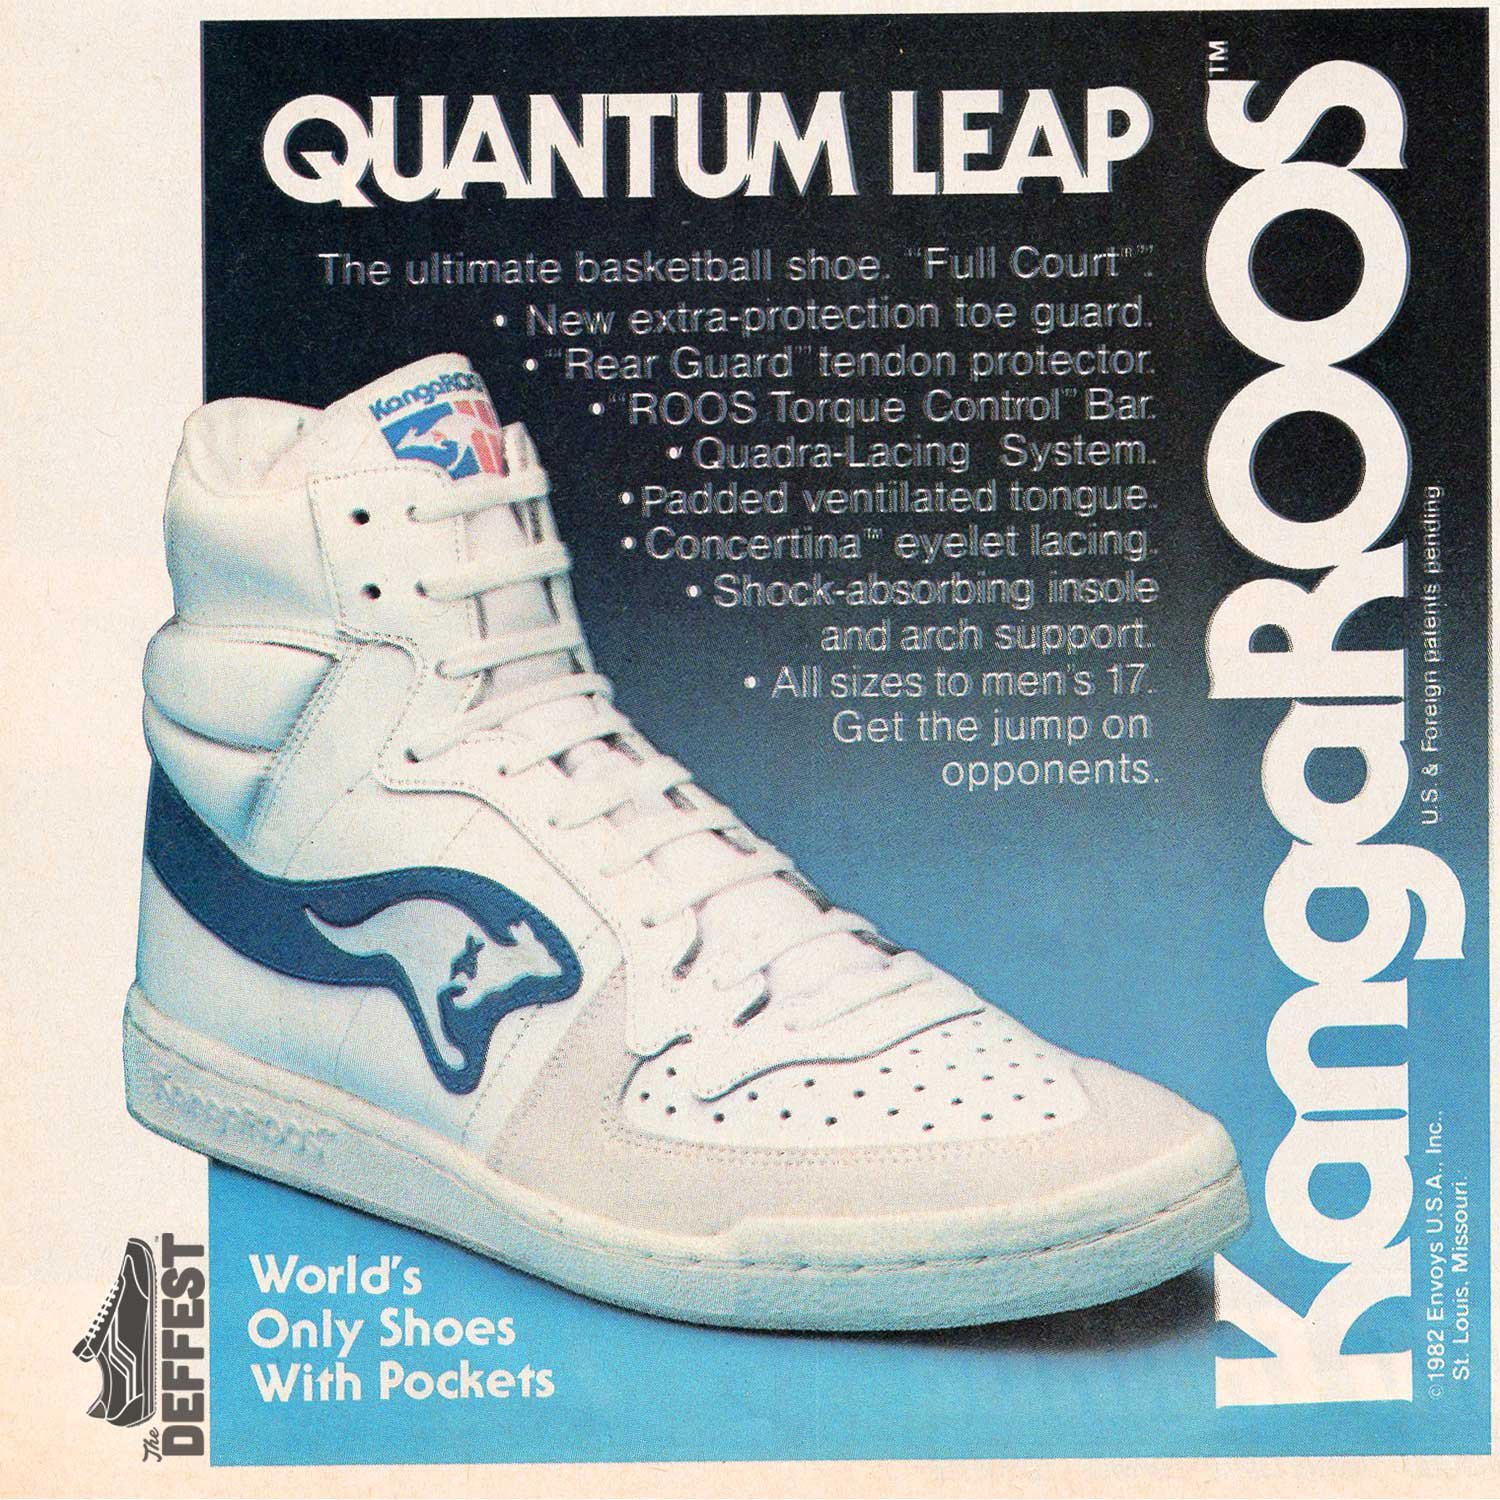 The Deffest®. A vintage and retro sneaker — Hoop Stars: Kangaroos 1982 Quantum Leap Basketball Shoes Vintage High Top Sneakers